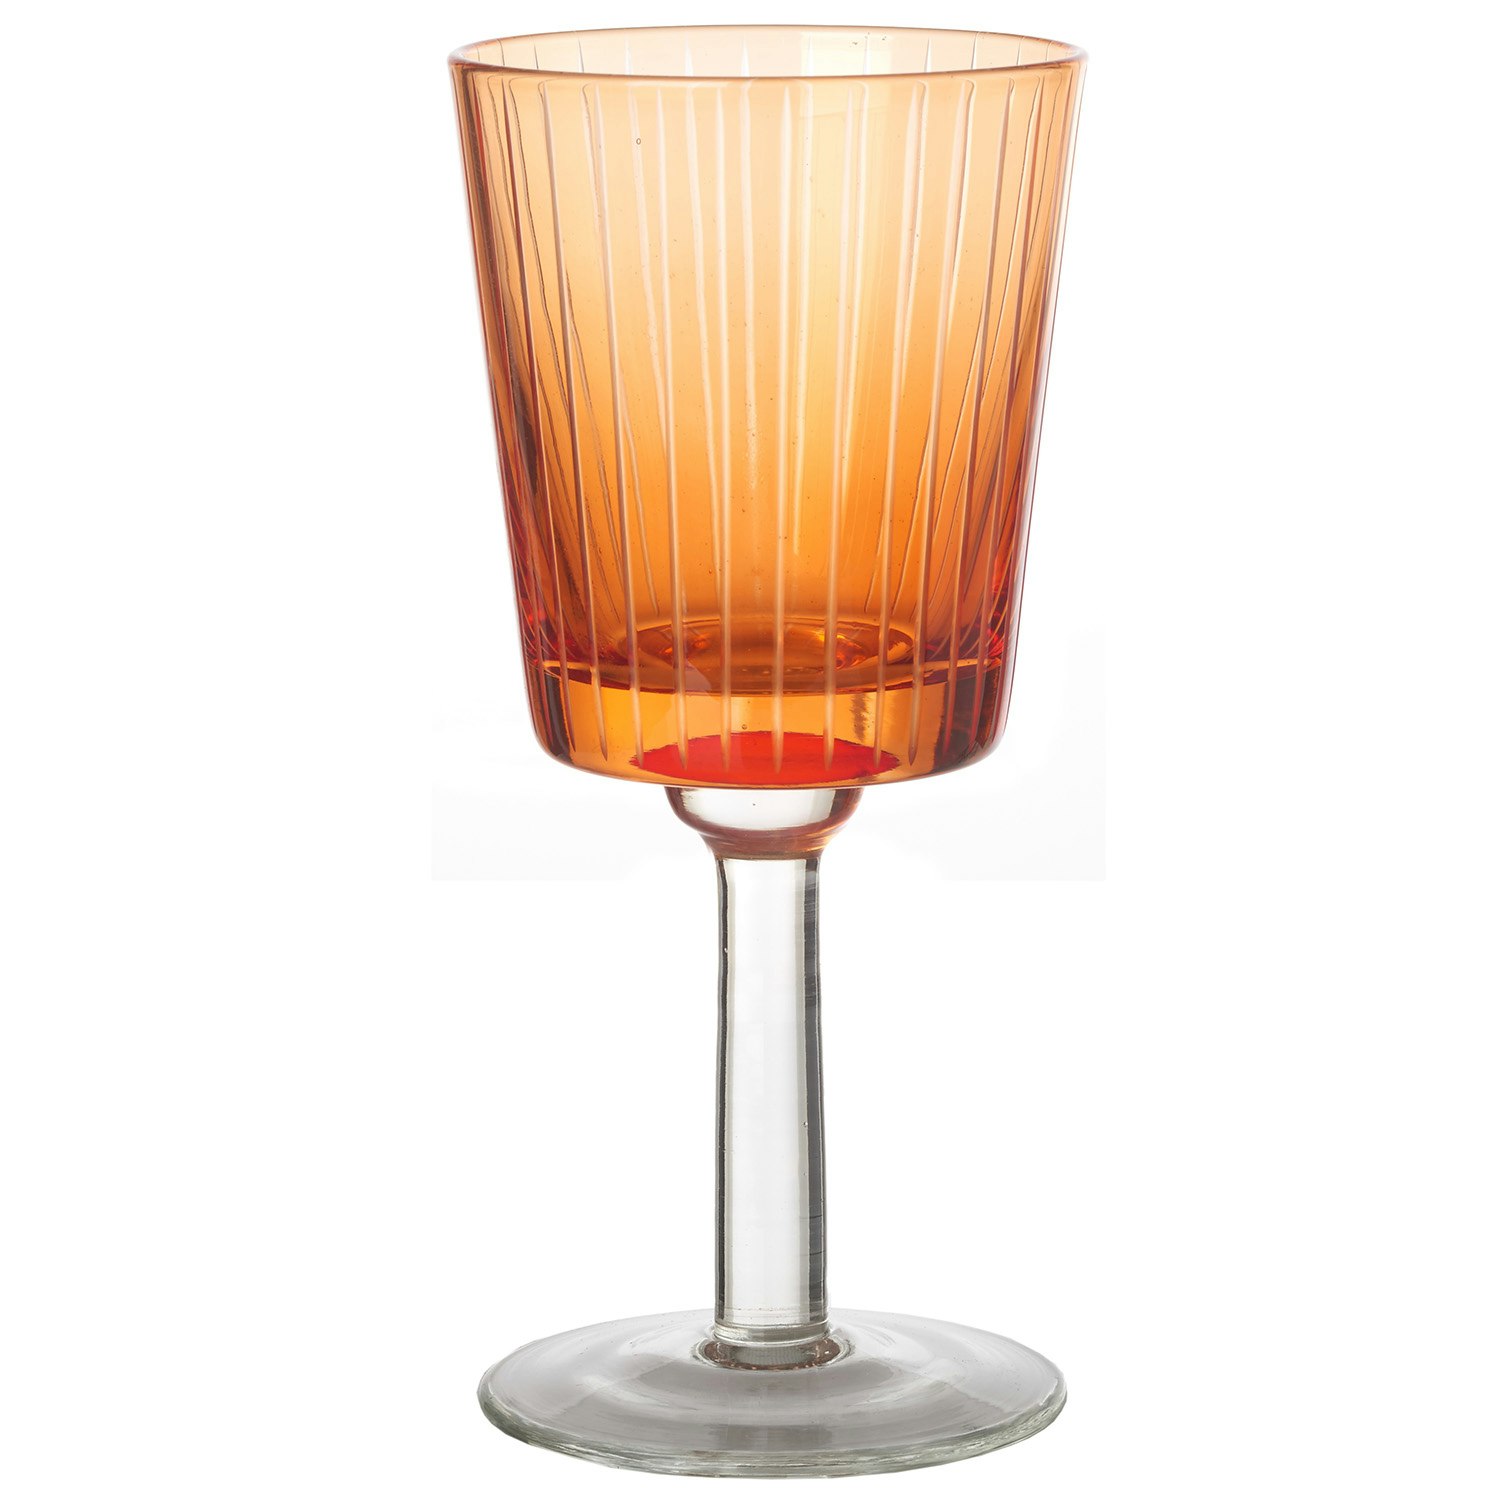 https://royaldesign.com/image/2/pols-potten-wine-glass-library-set-6-2